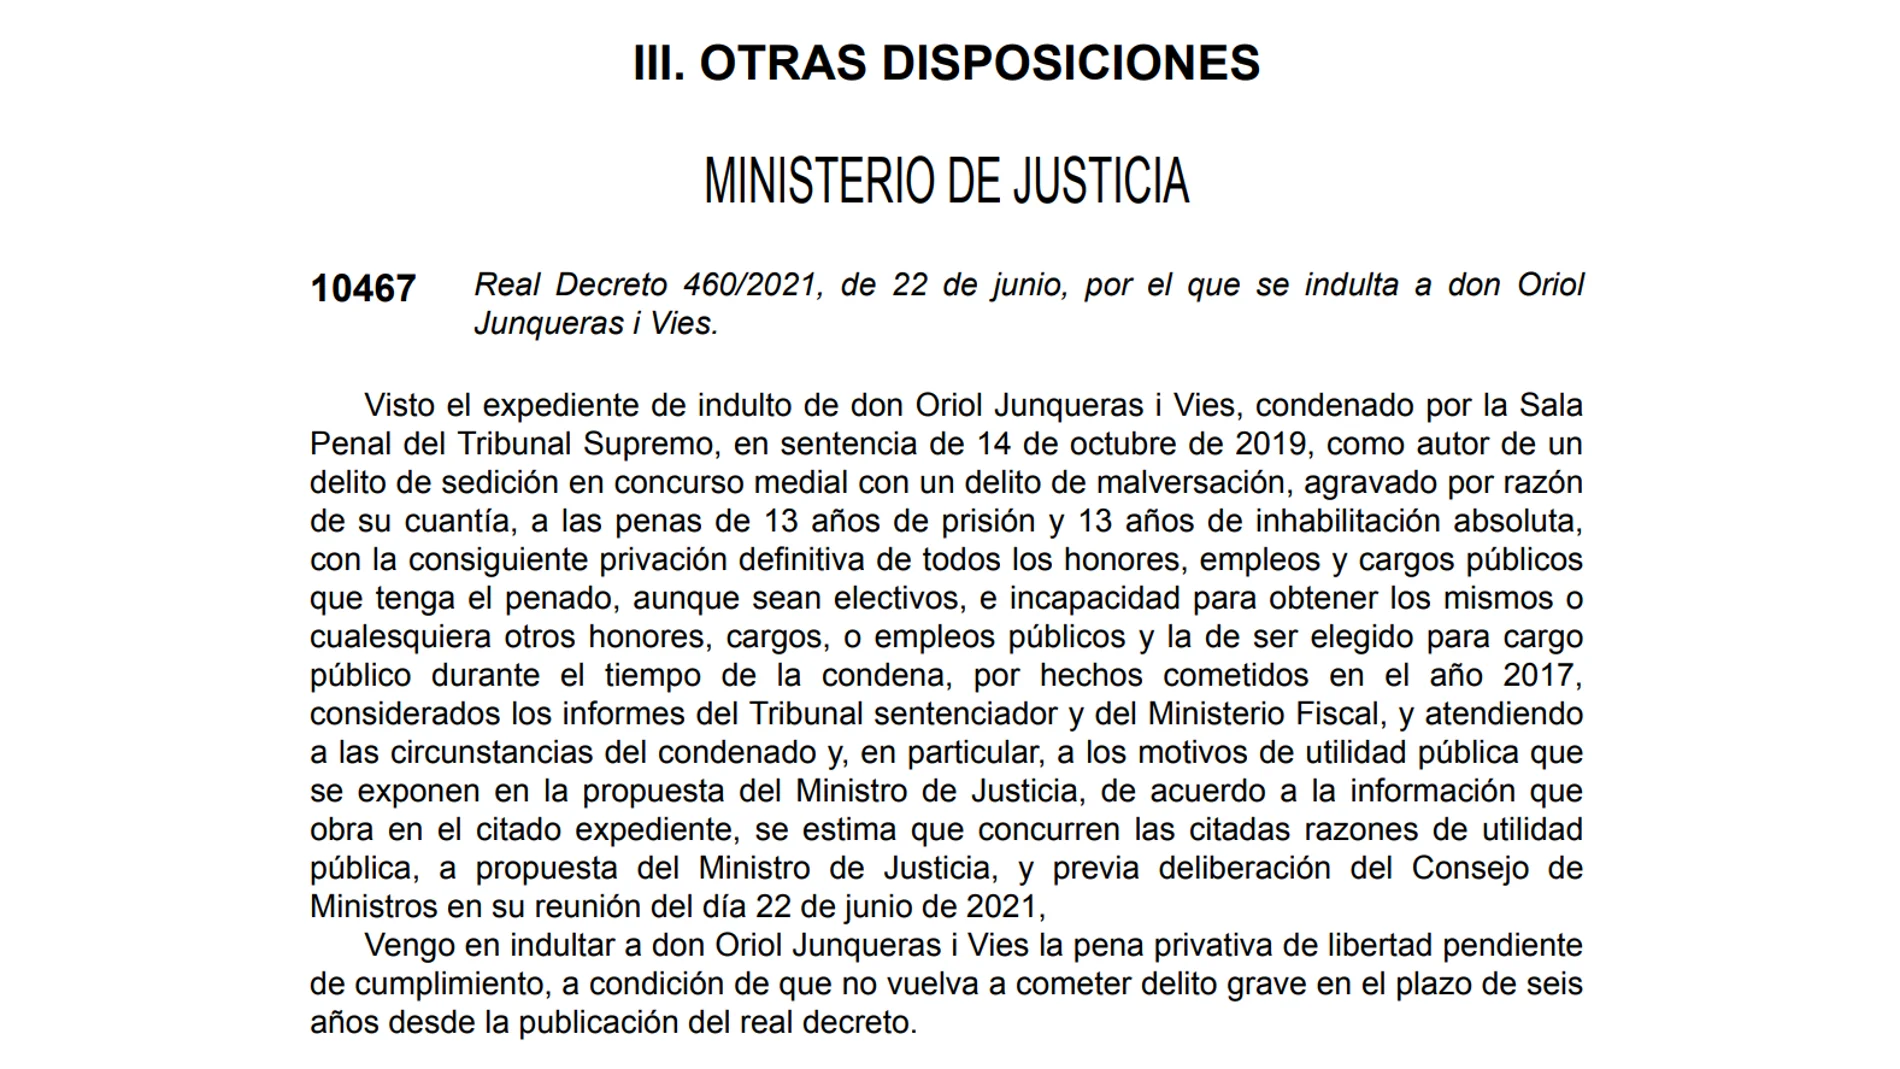 Real Decreto del indulto a Oriol Junqueras